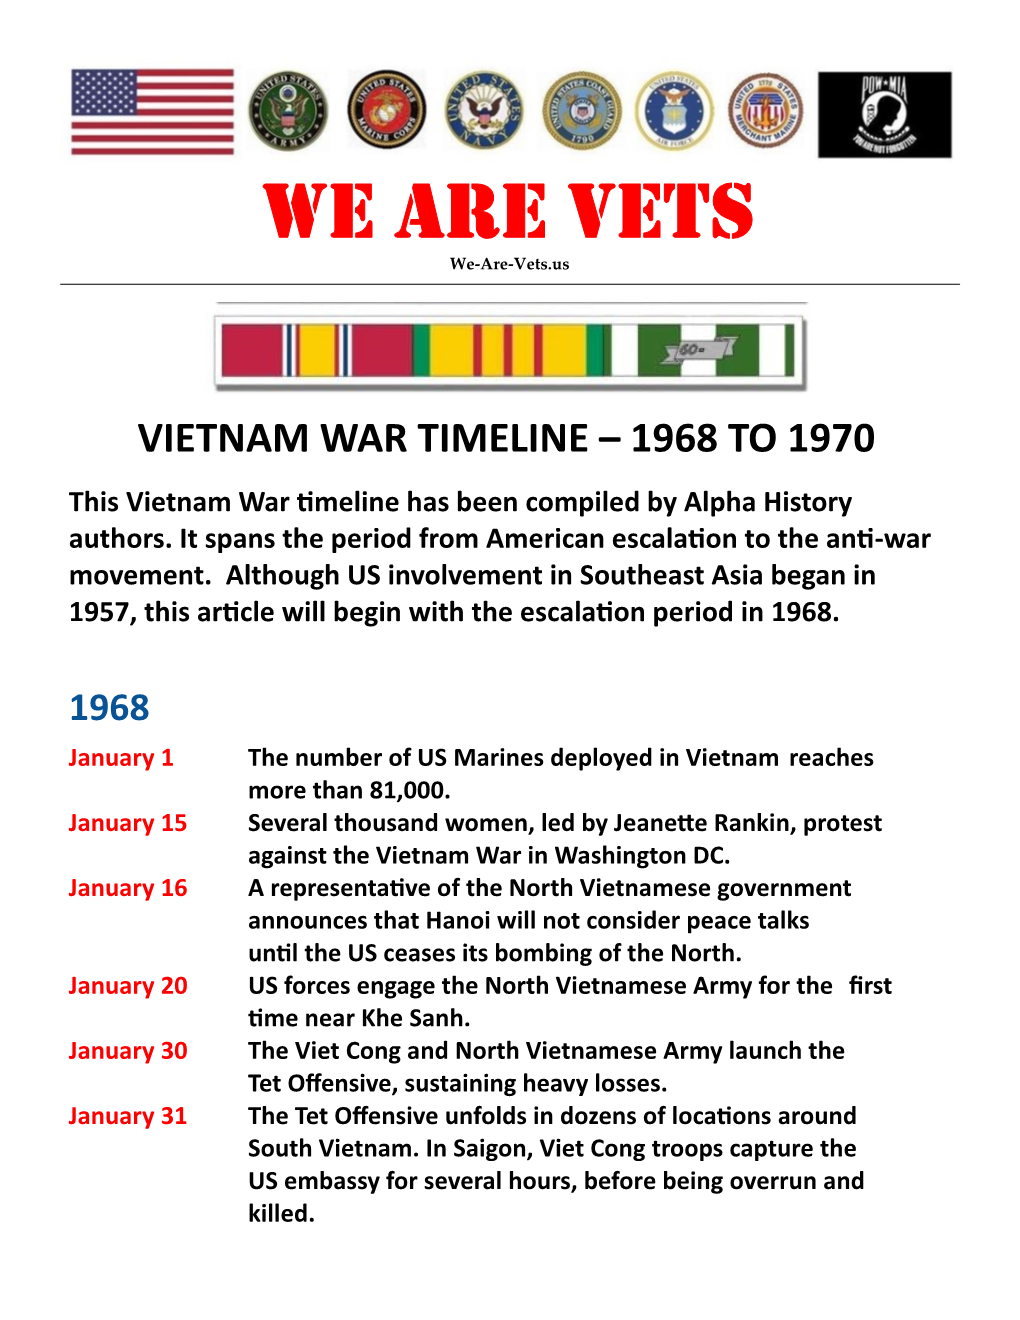 Vietnam Timeline